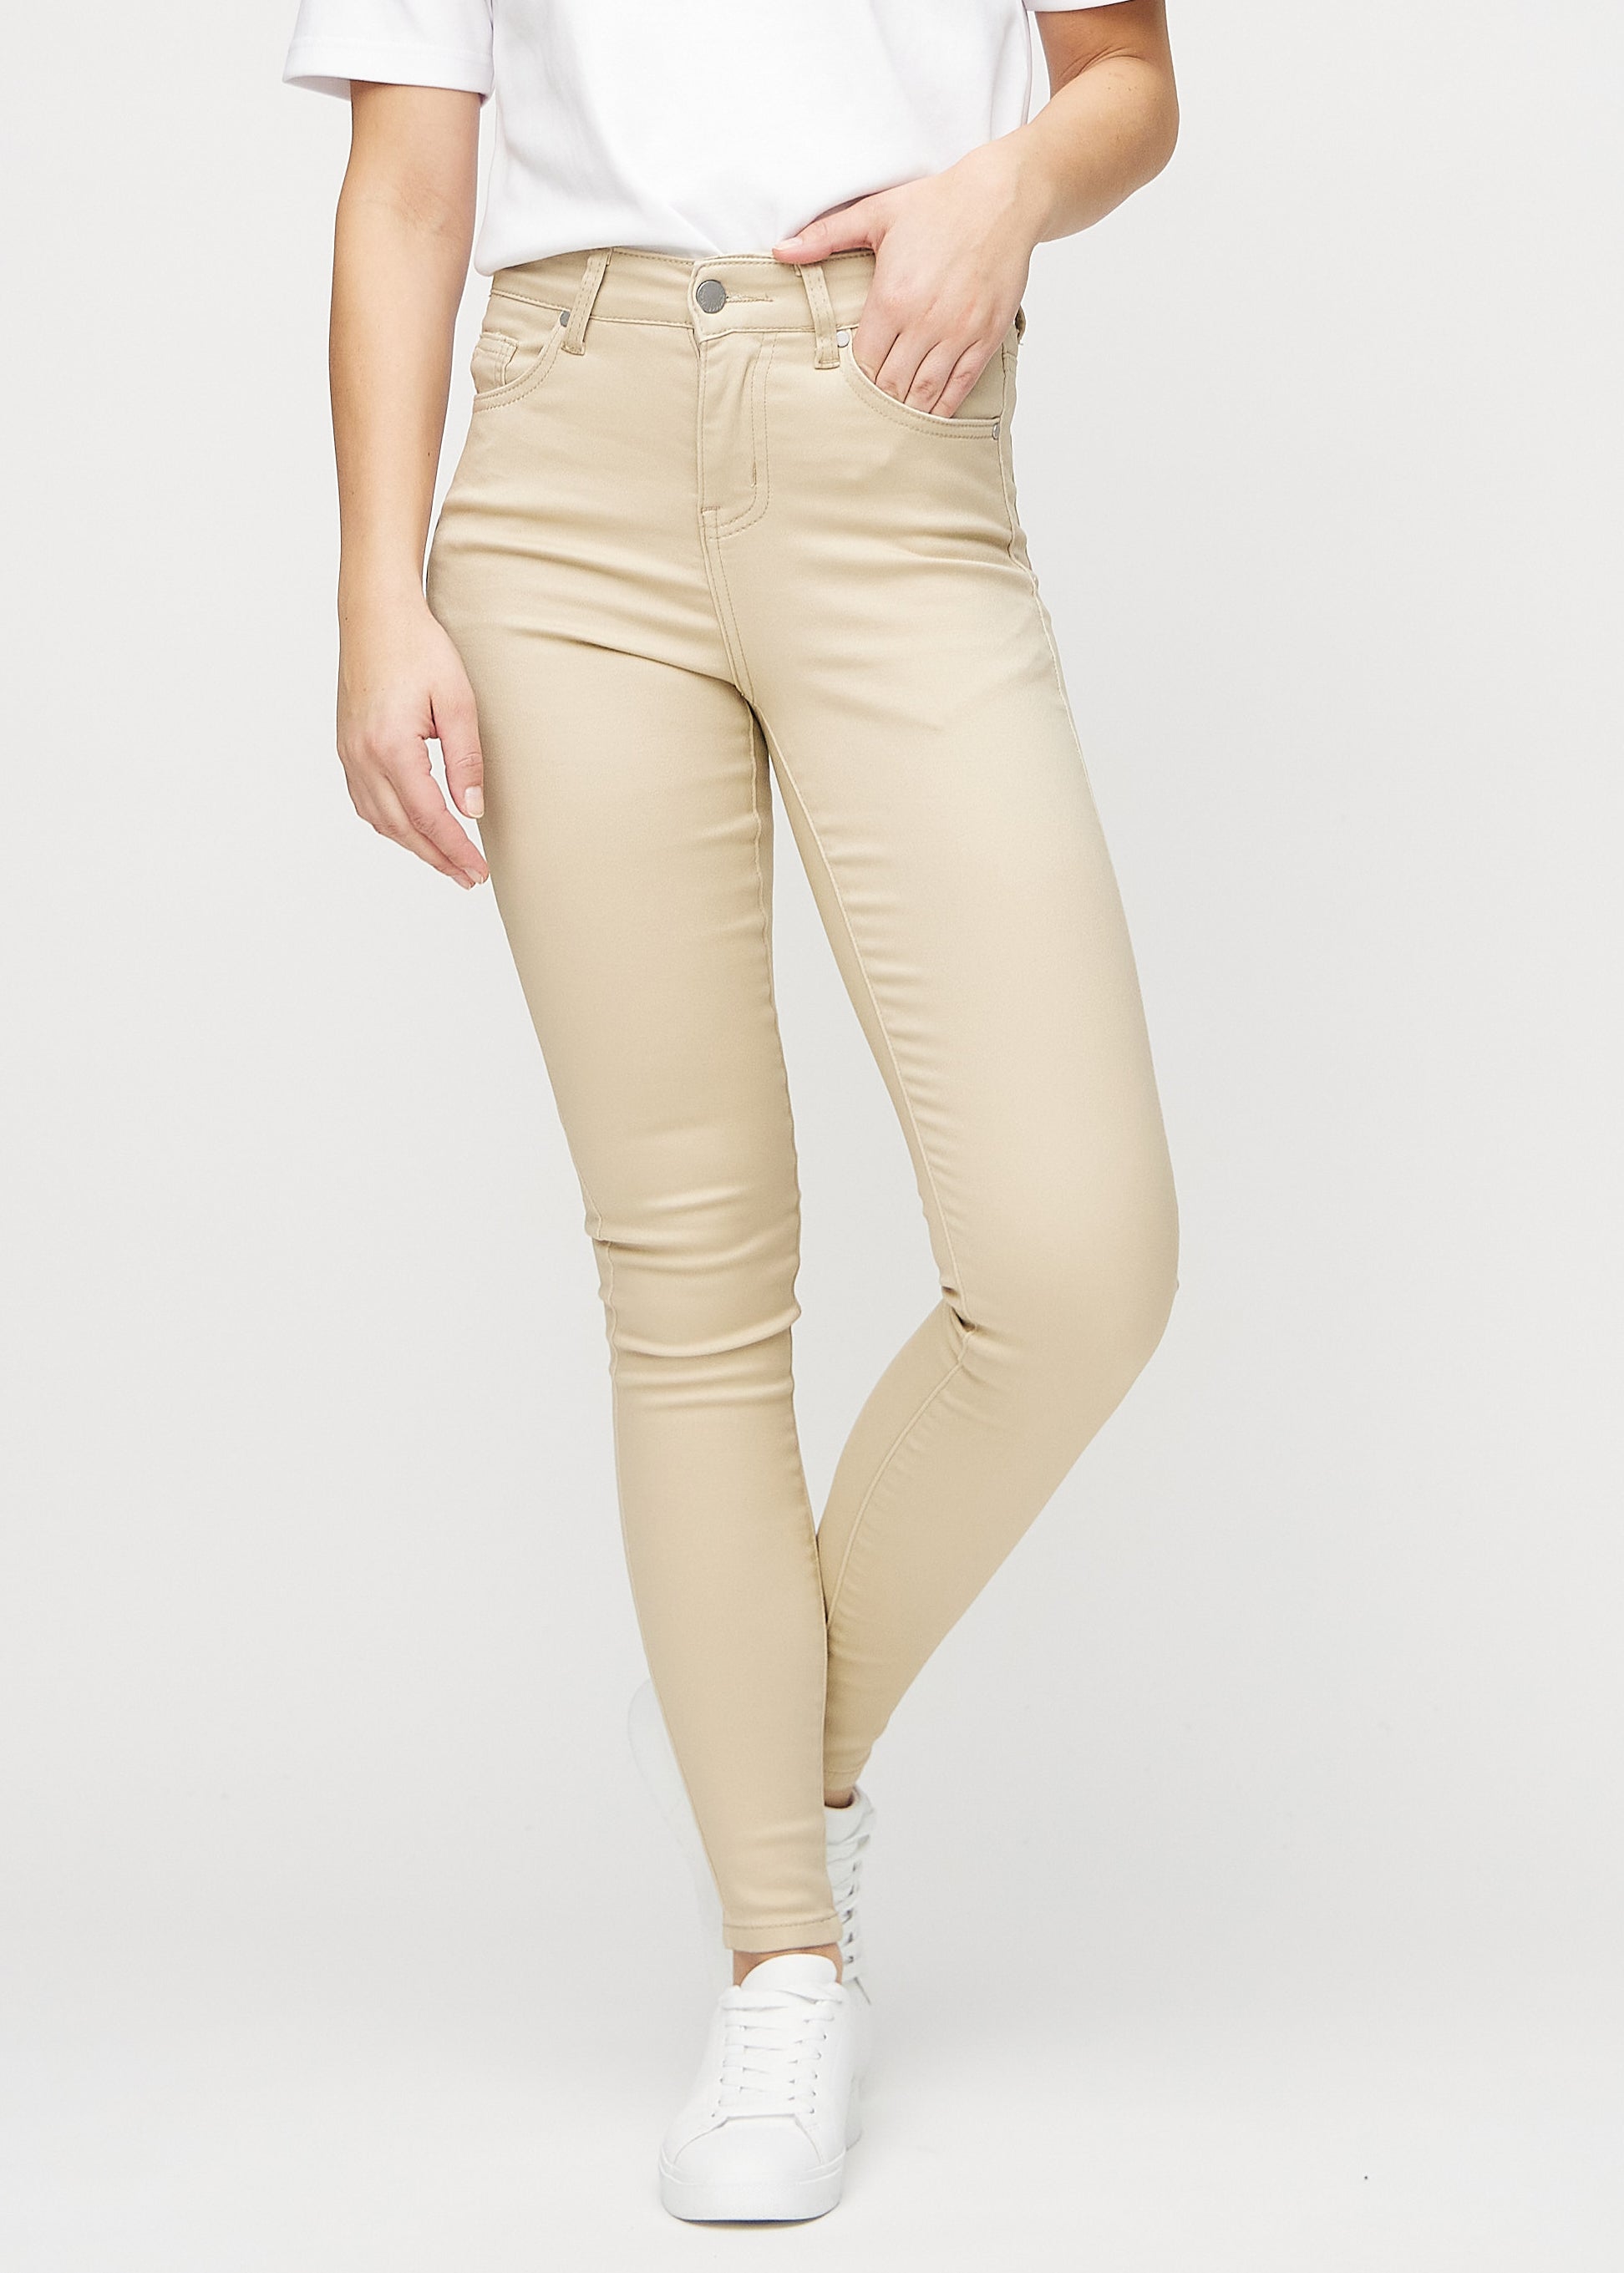 Women's Denim Pants with Pinafore straps – Stylestone